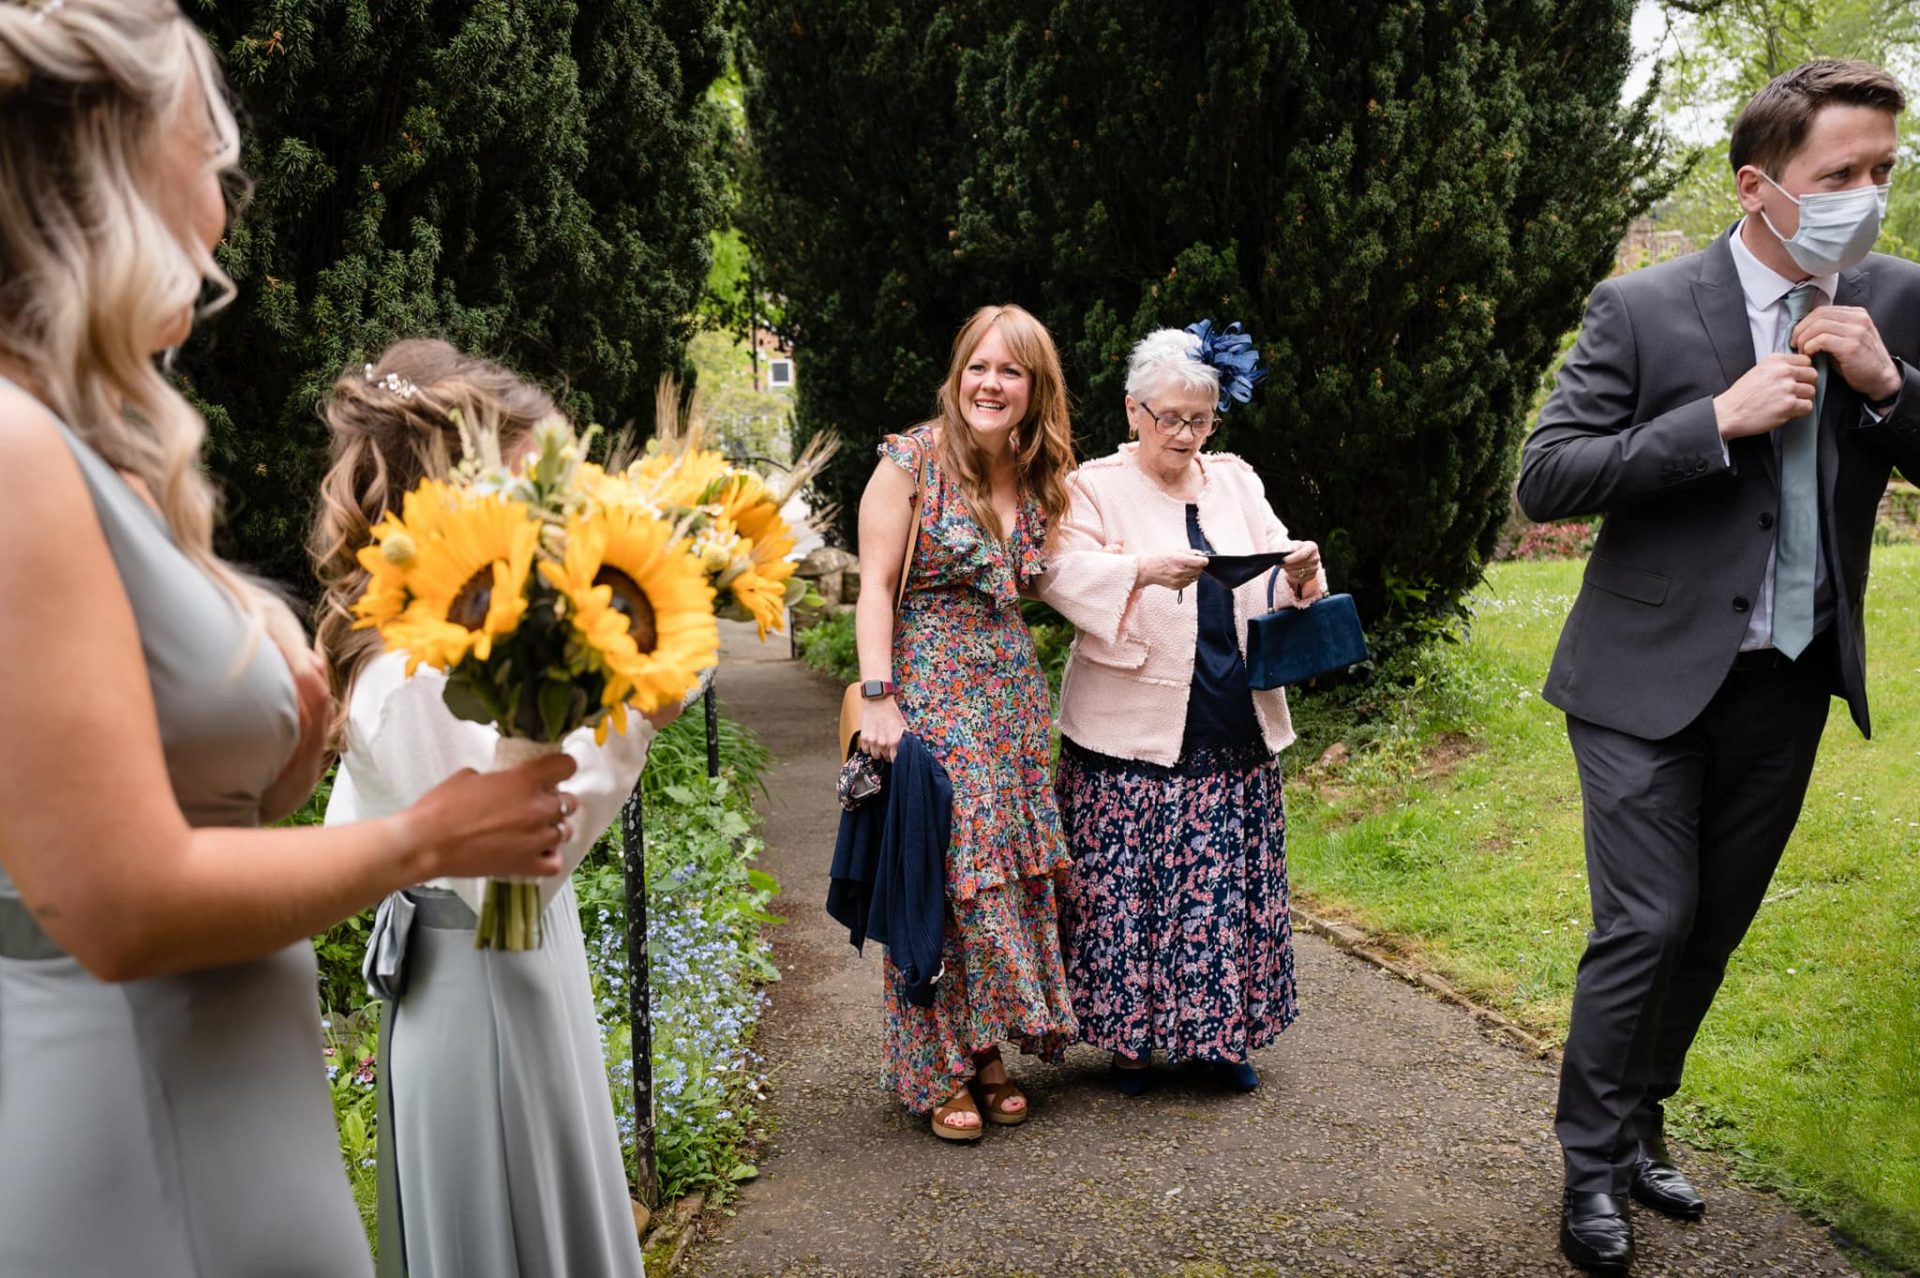 Wedding guests arriving at Dallington church